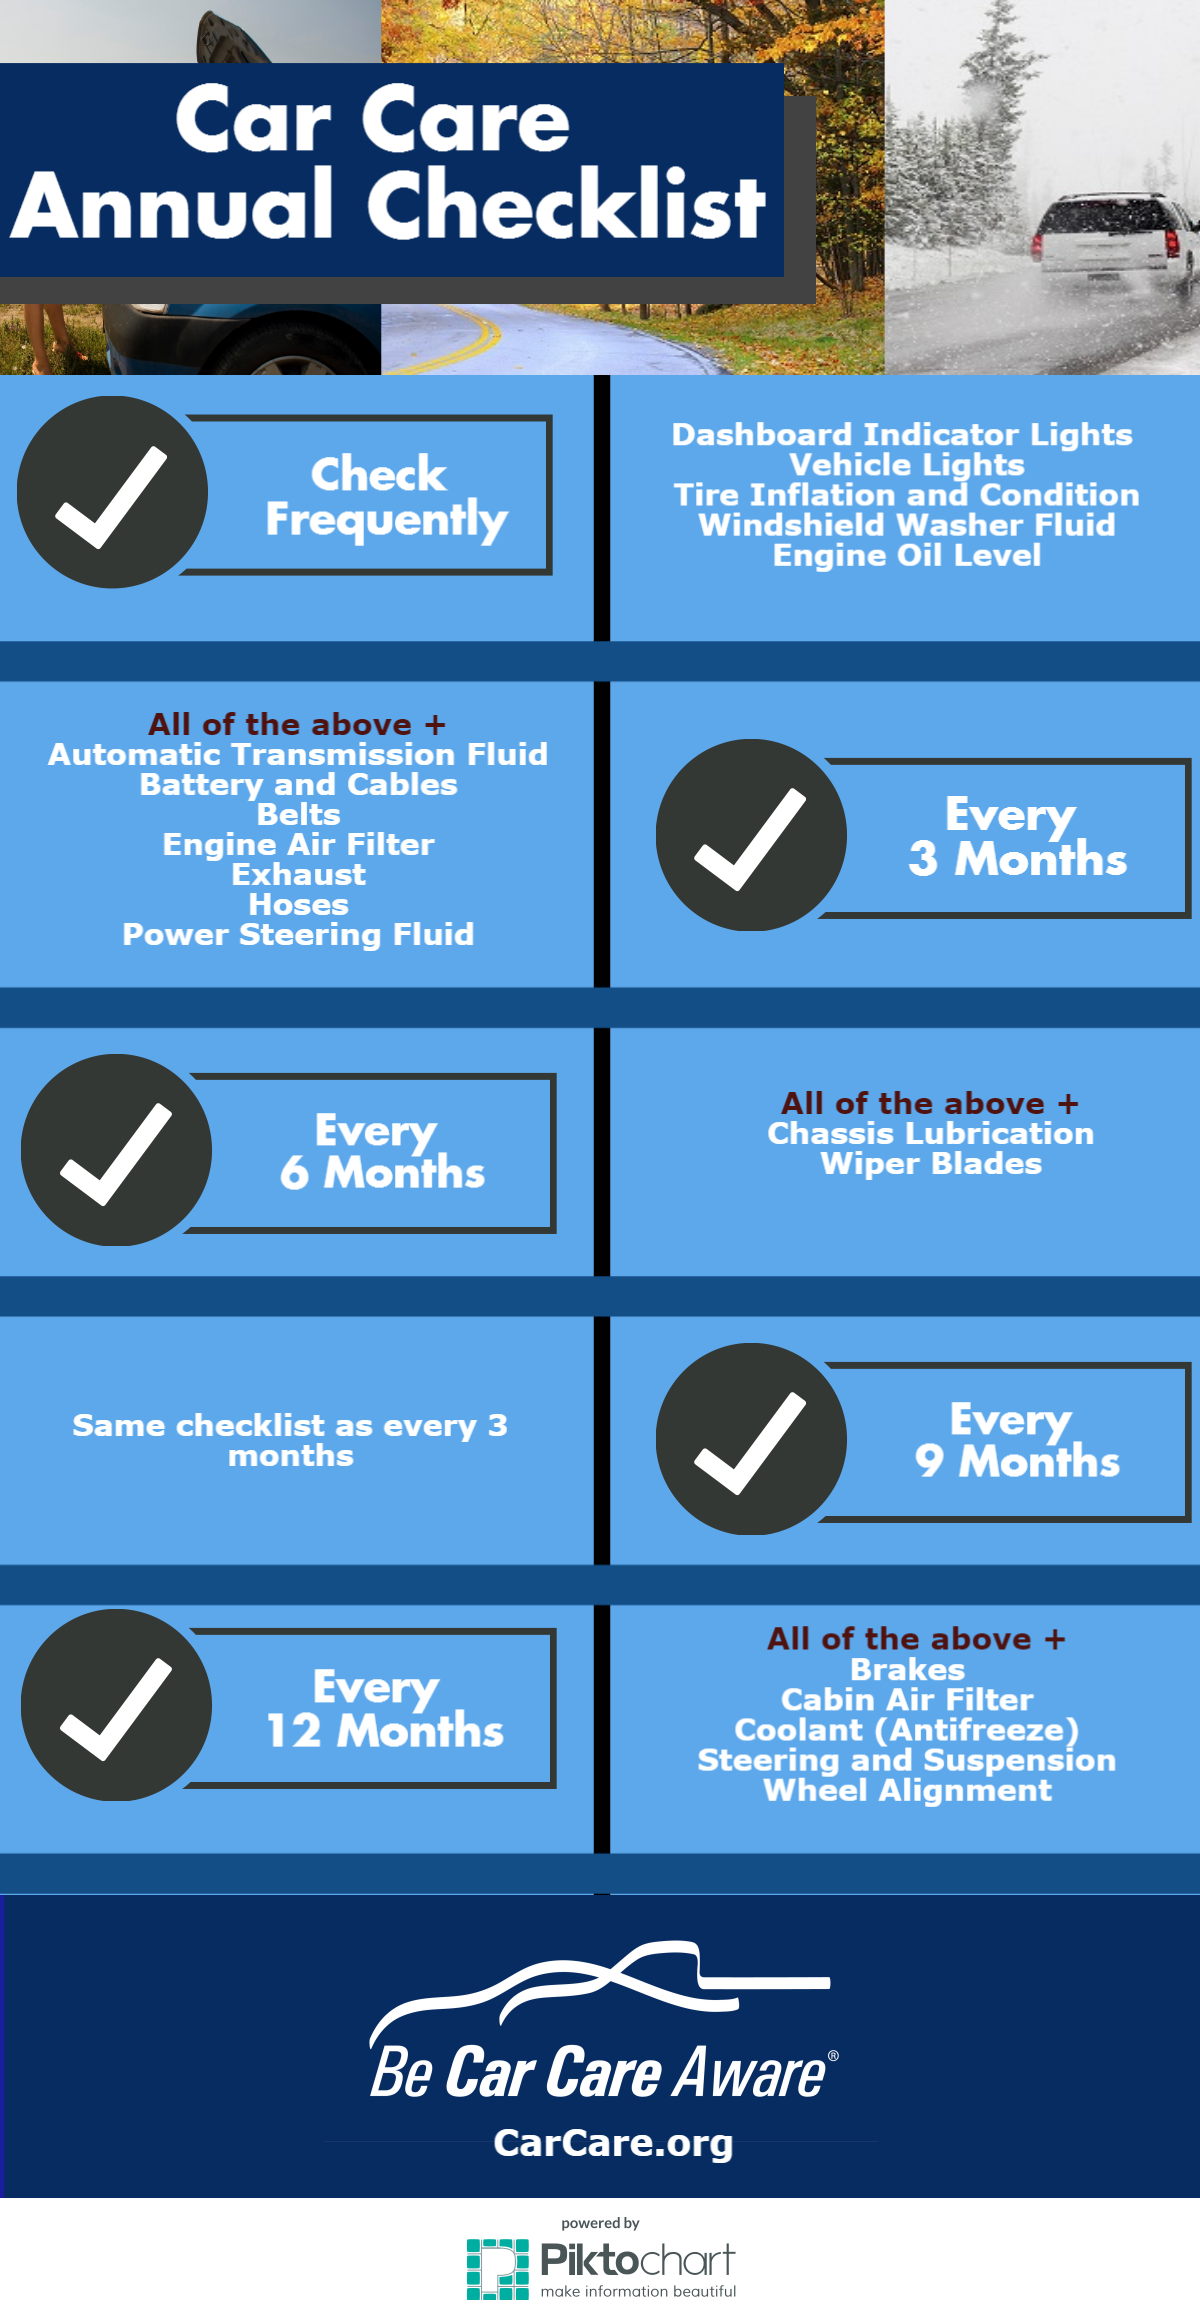 Car Care Annual Checklist - Infographic